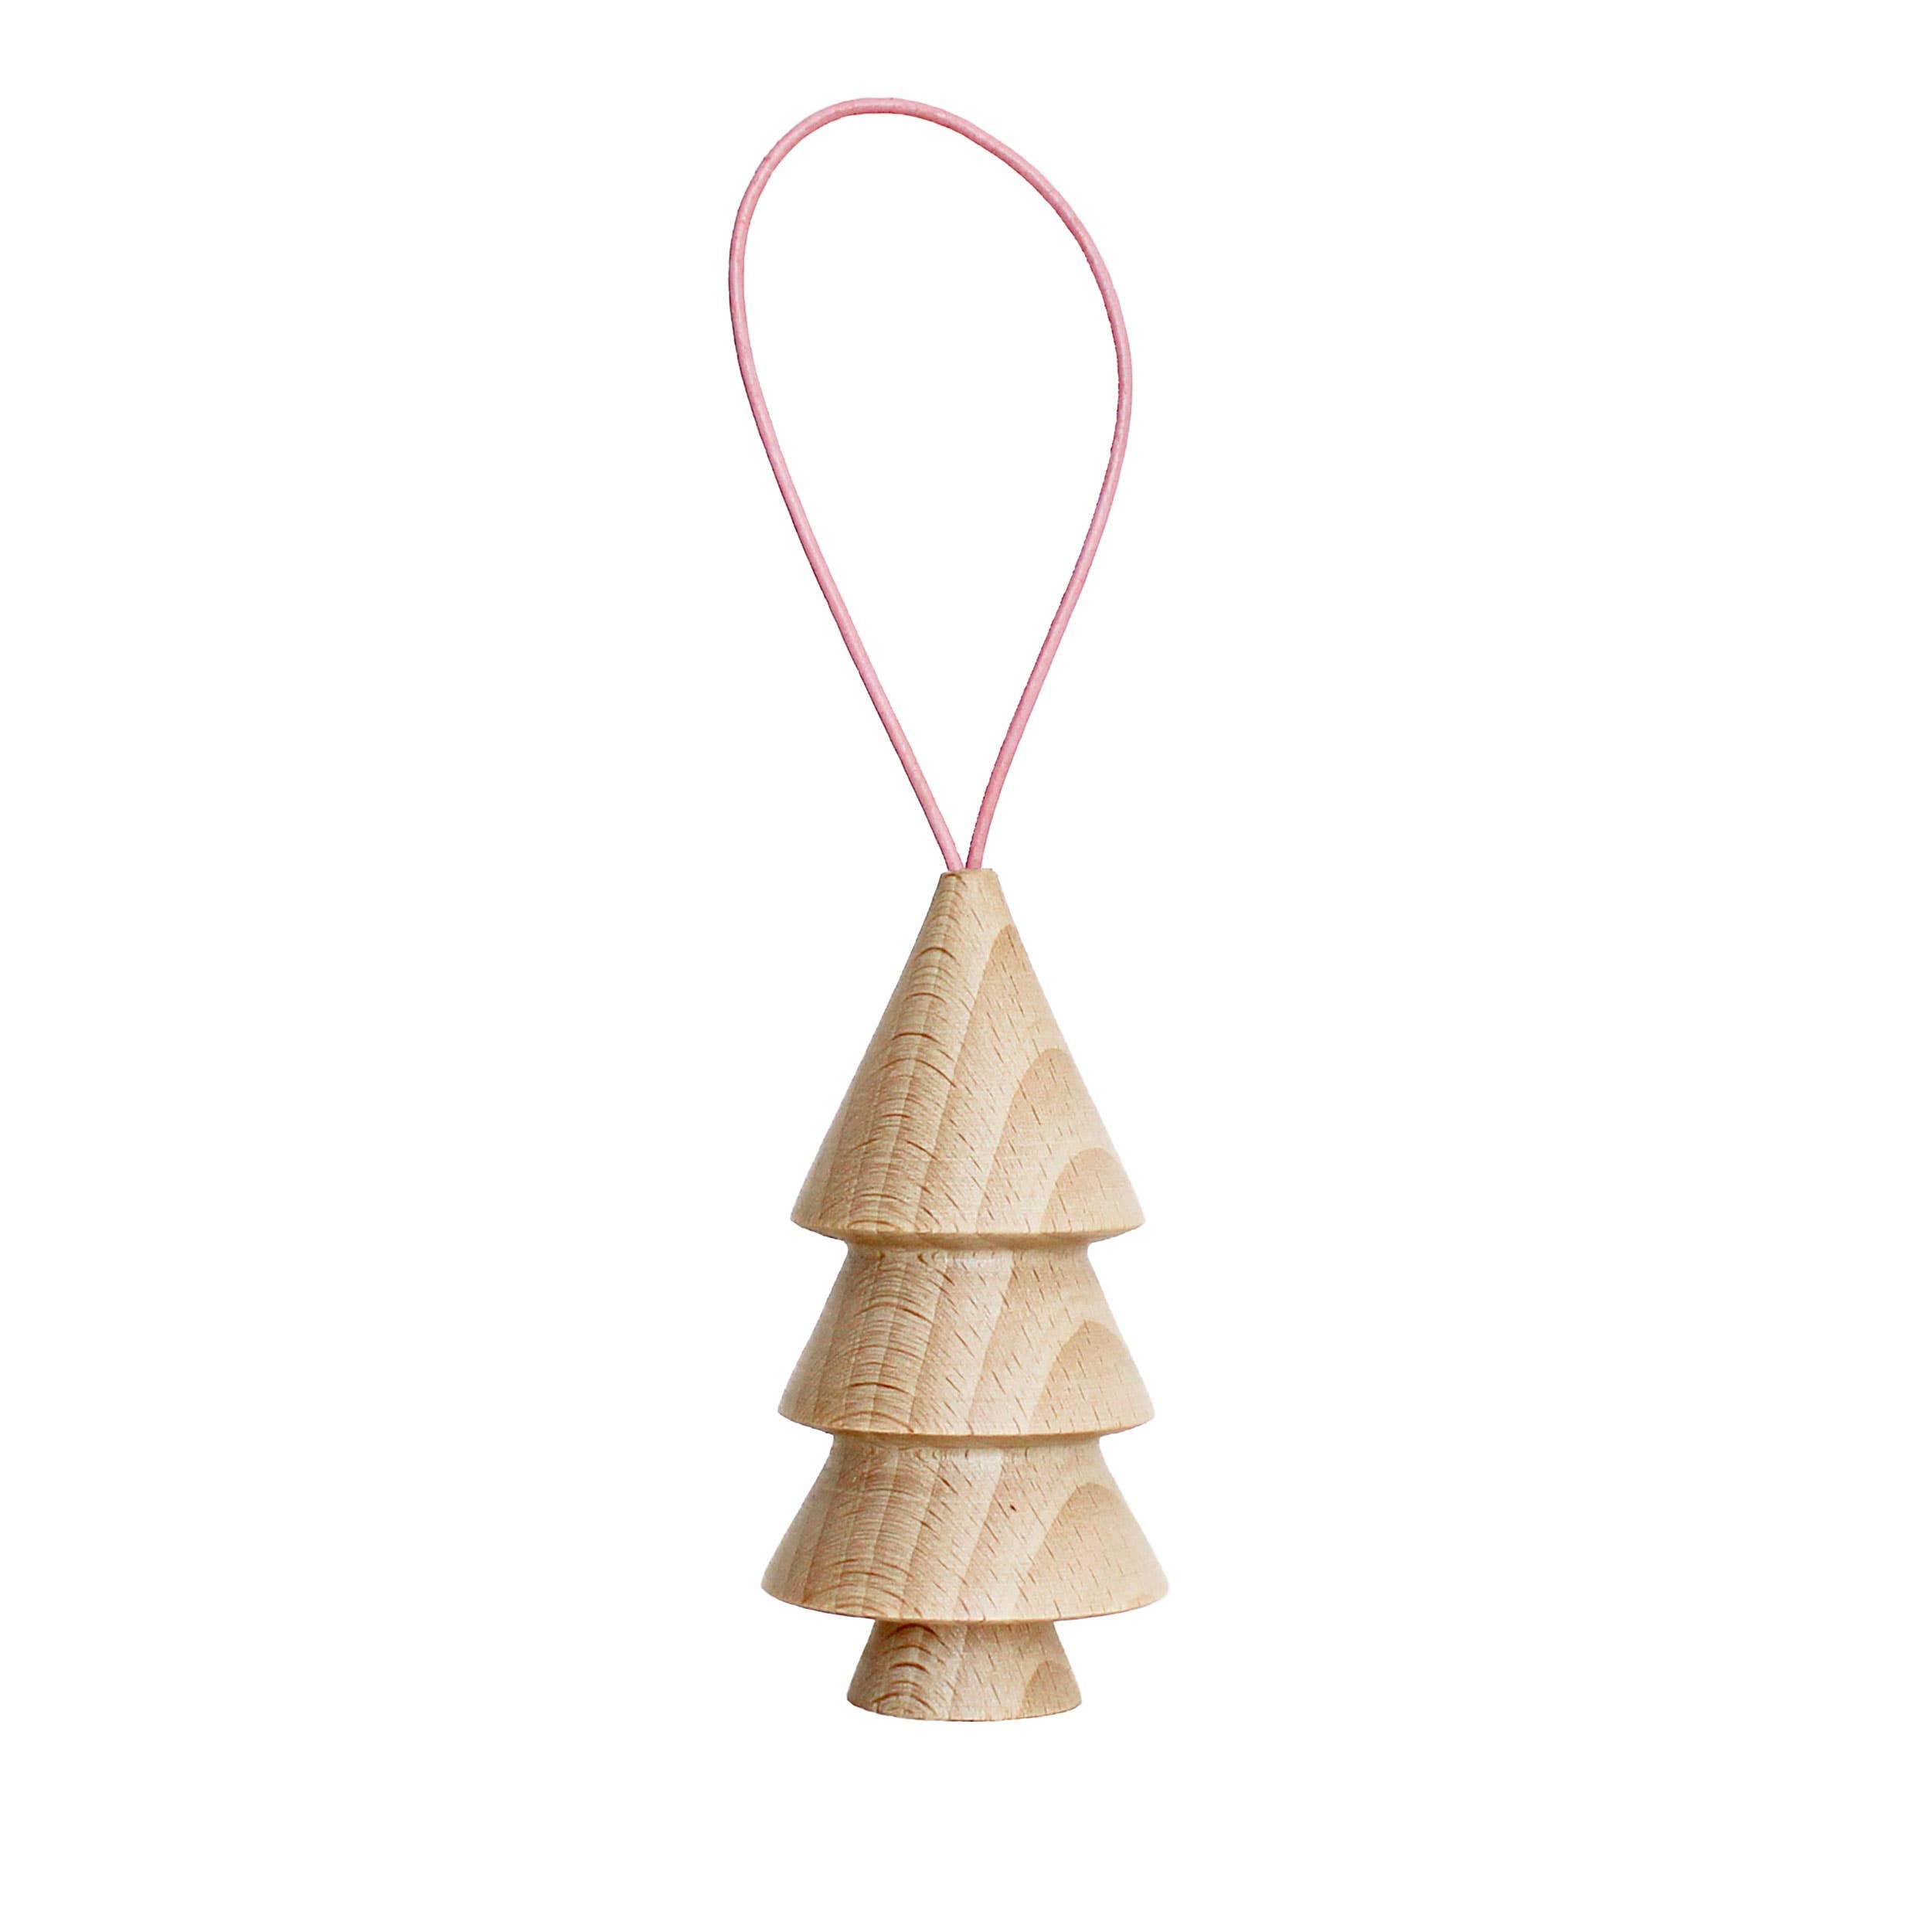 Wooden Christmas Tree / Bauble / Ornament / Hanger - Nr. 3